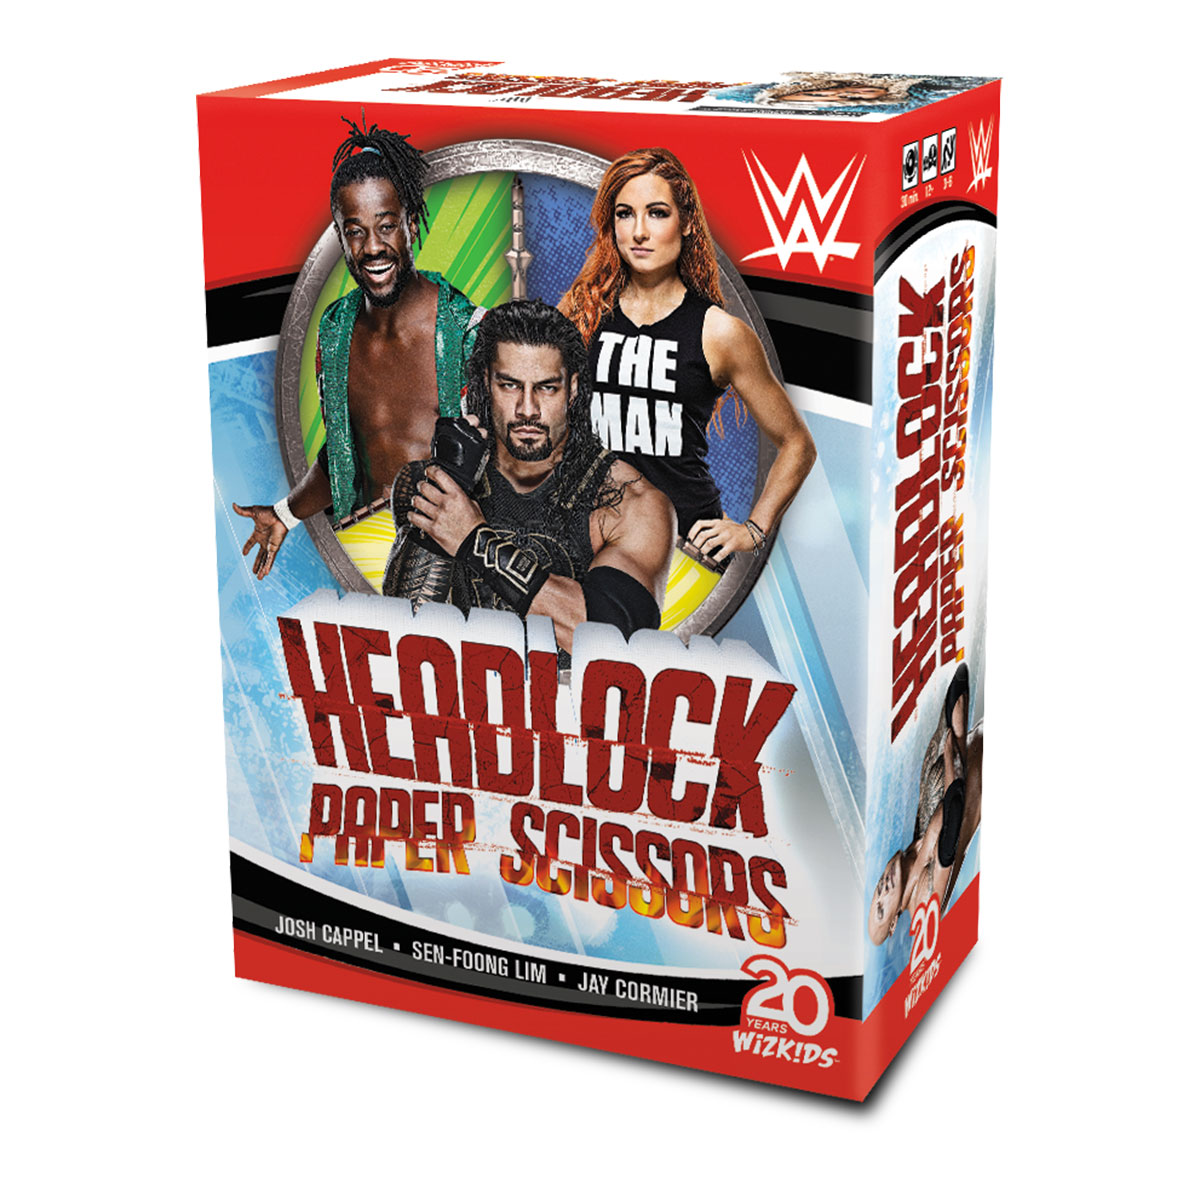 WizKids | Claim the Money in the Bank Briefcase in WWE: Headlock, Paper, Scissors—Coming Soon!